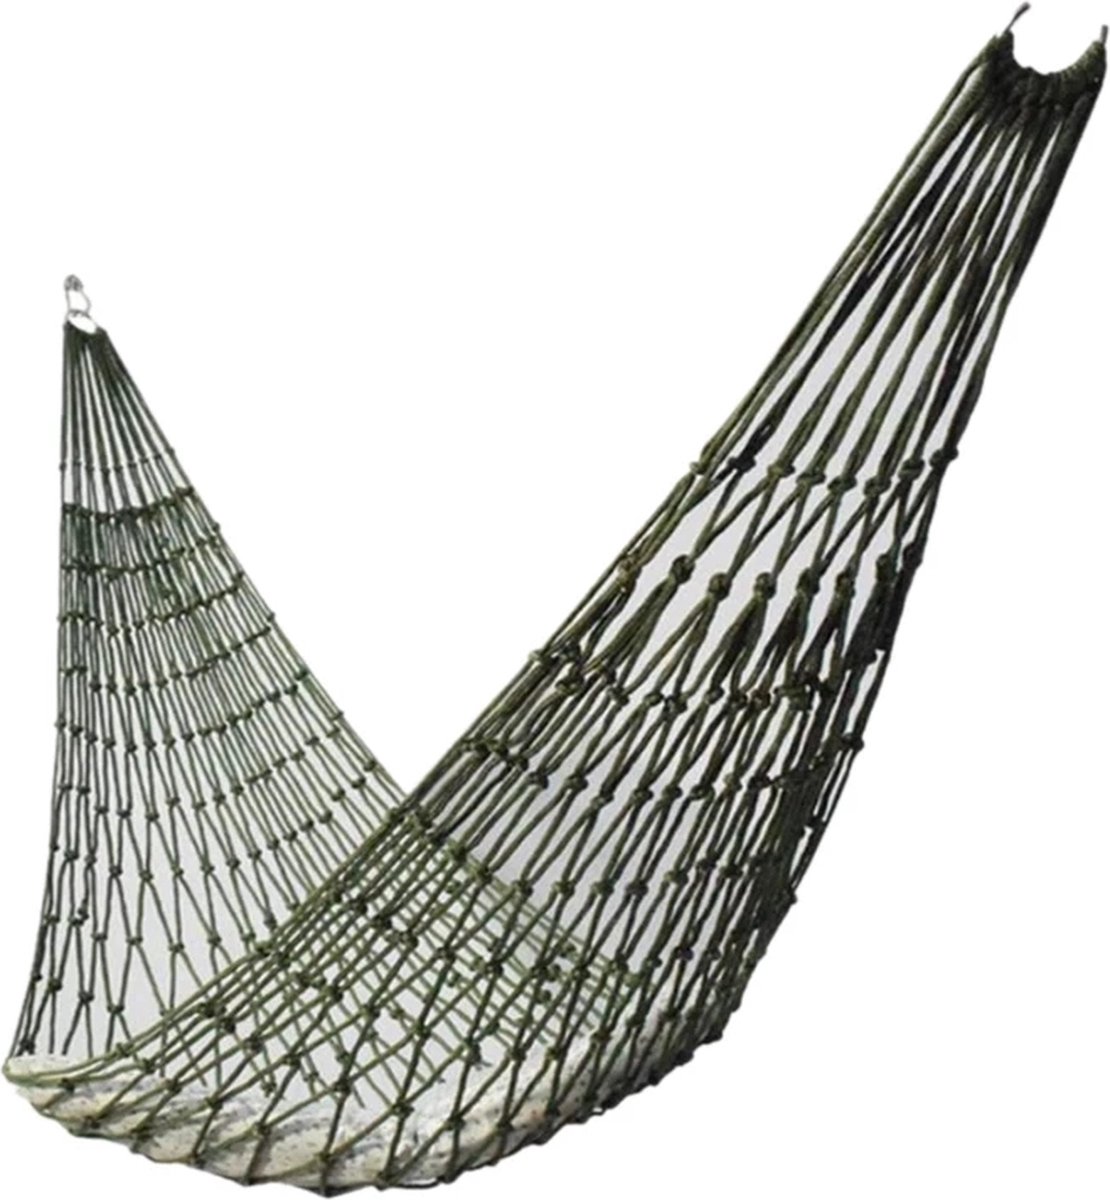 Hangmat - Groen - 250x100cm - Swing hangmat - Camping - Survival | bol.com